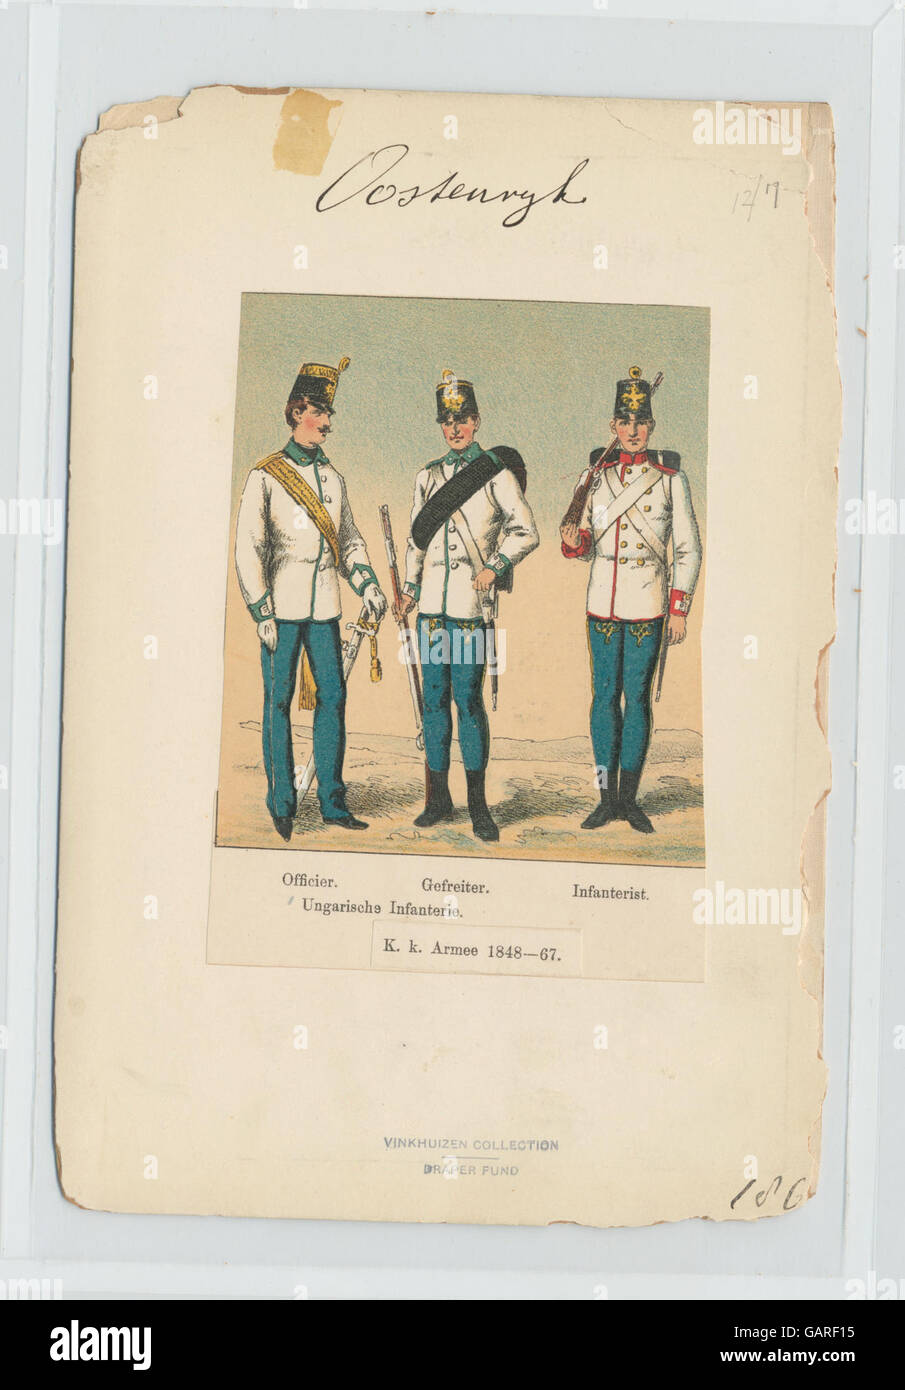 Ungarische Infanterie- Officier, Gefreiter, Infanterist. K.k. Armee 1848-67 ( b14896507-90440) Foto Stock